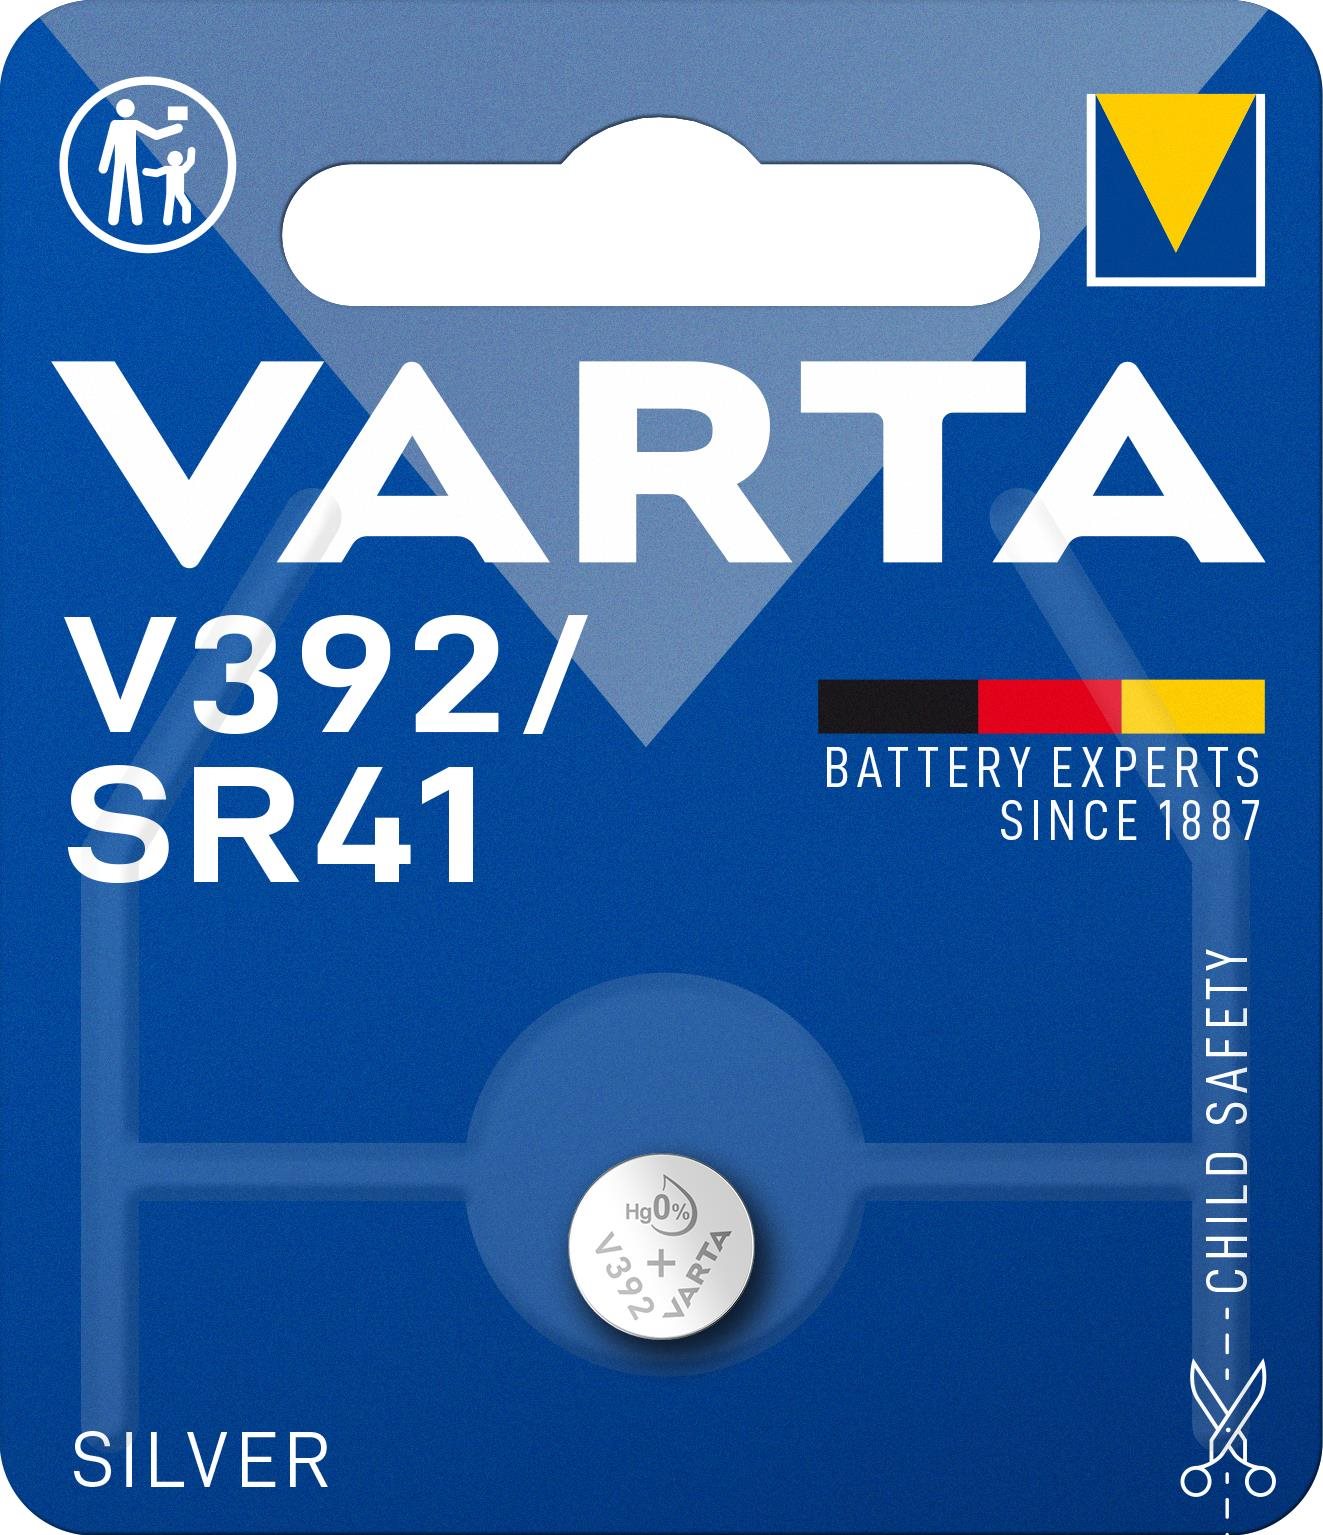 VARTA Speciális ezüst-oxid elem V392/SR41 1 db